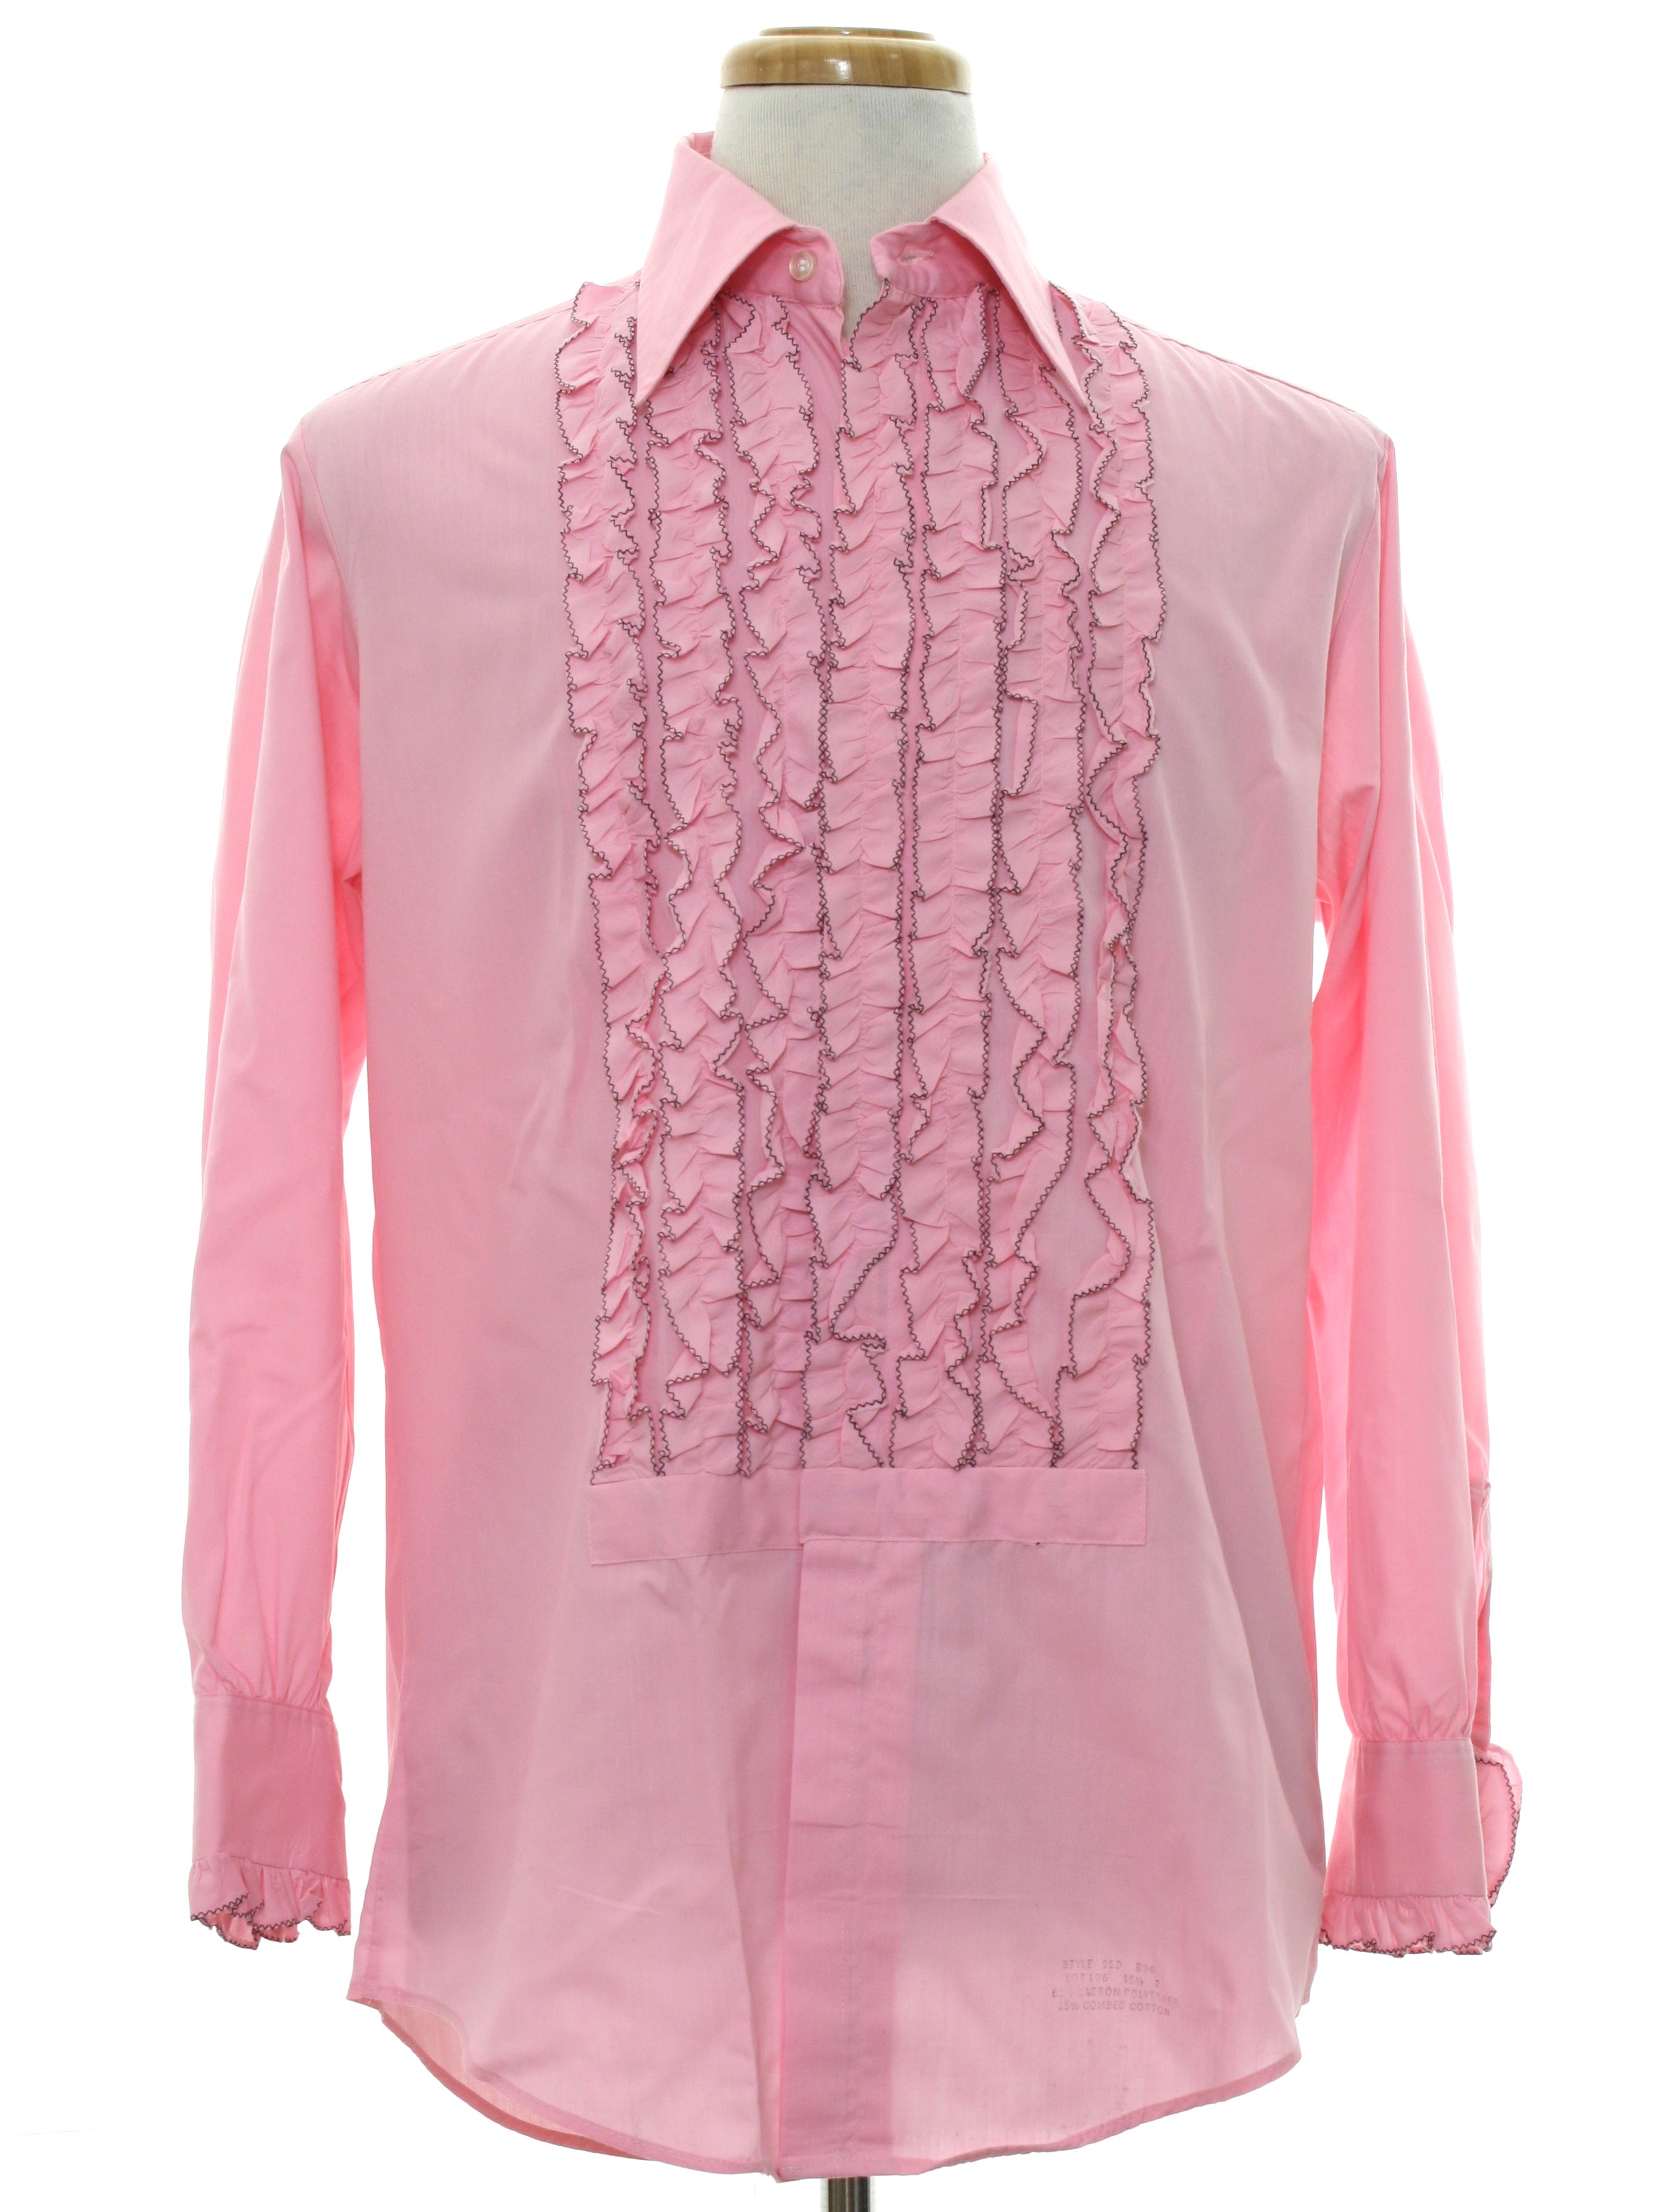 1970's Vintage Delton Shirt: 70s -Delton- Mens hot pink background with ...